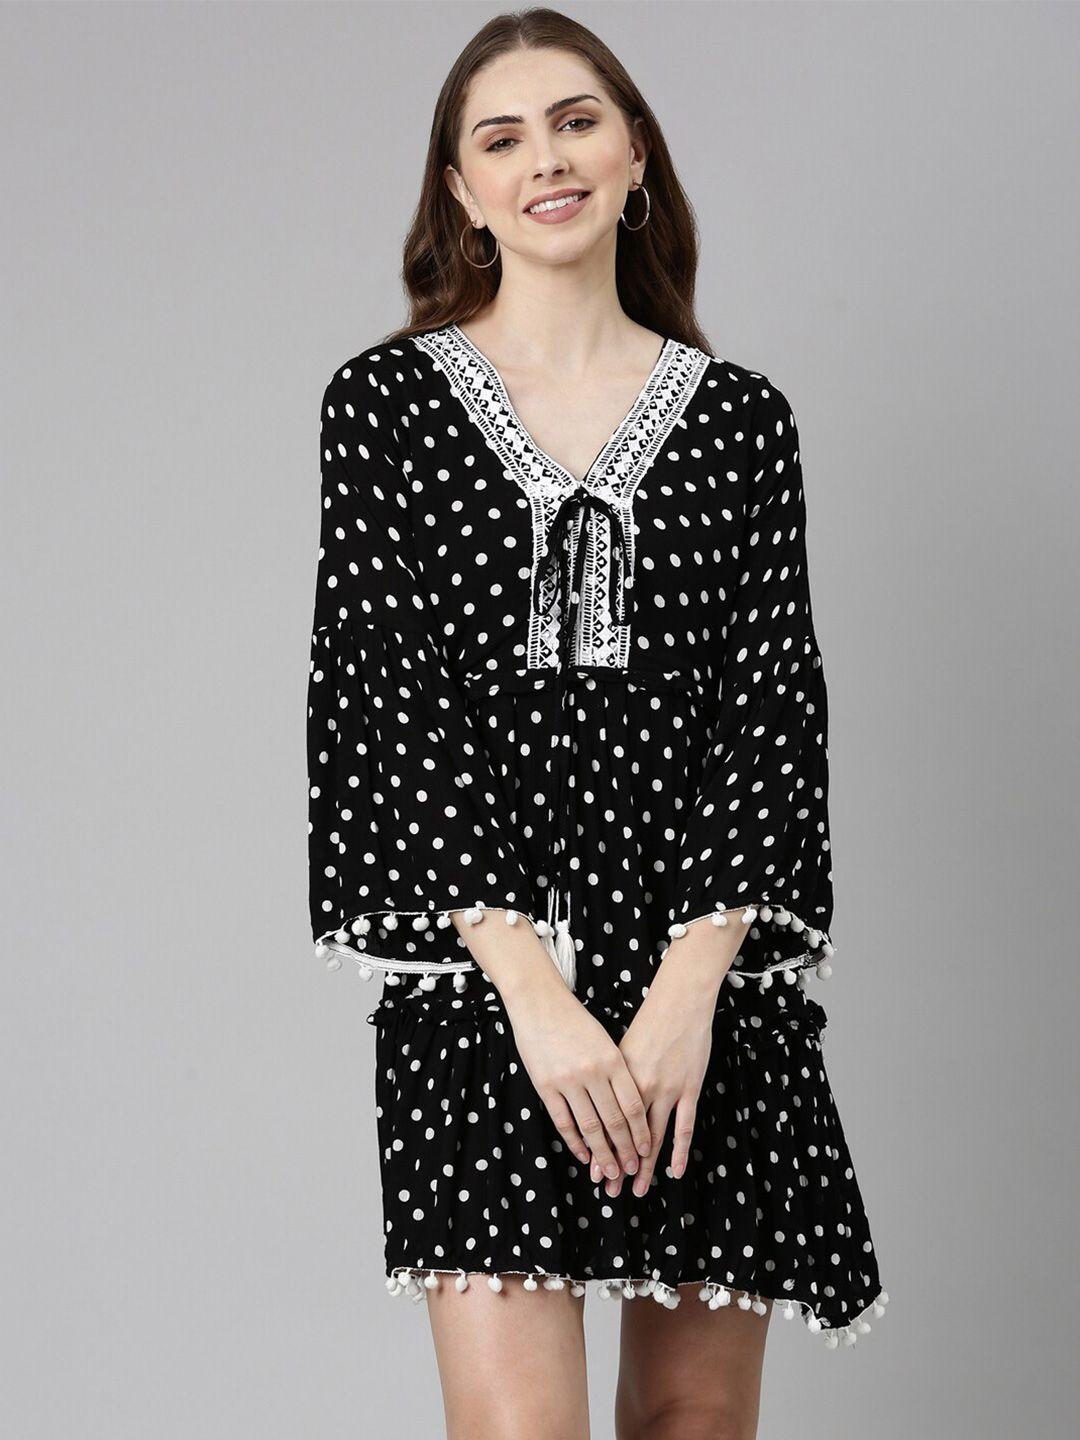 showoff-cotton-polka-dots-printed-a-line-dress